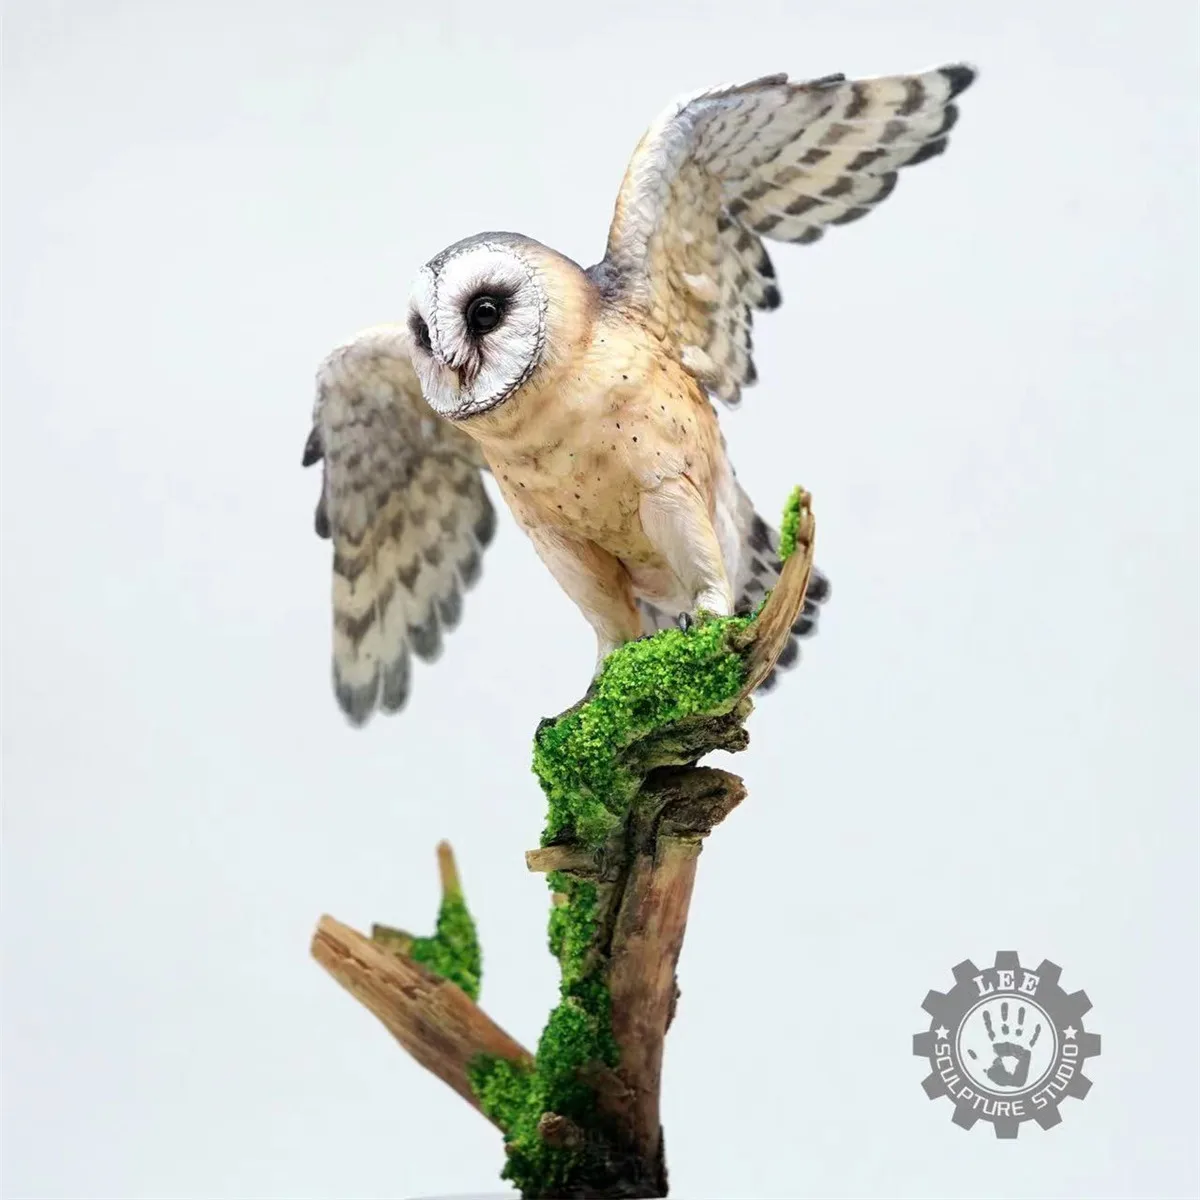 

LEE 1/4 Ferocious Birds of Prey Tyto alba Model Wild Animal Barn Owl Figure Collector GK Decoration Adult Gift Toy